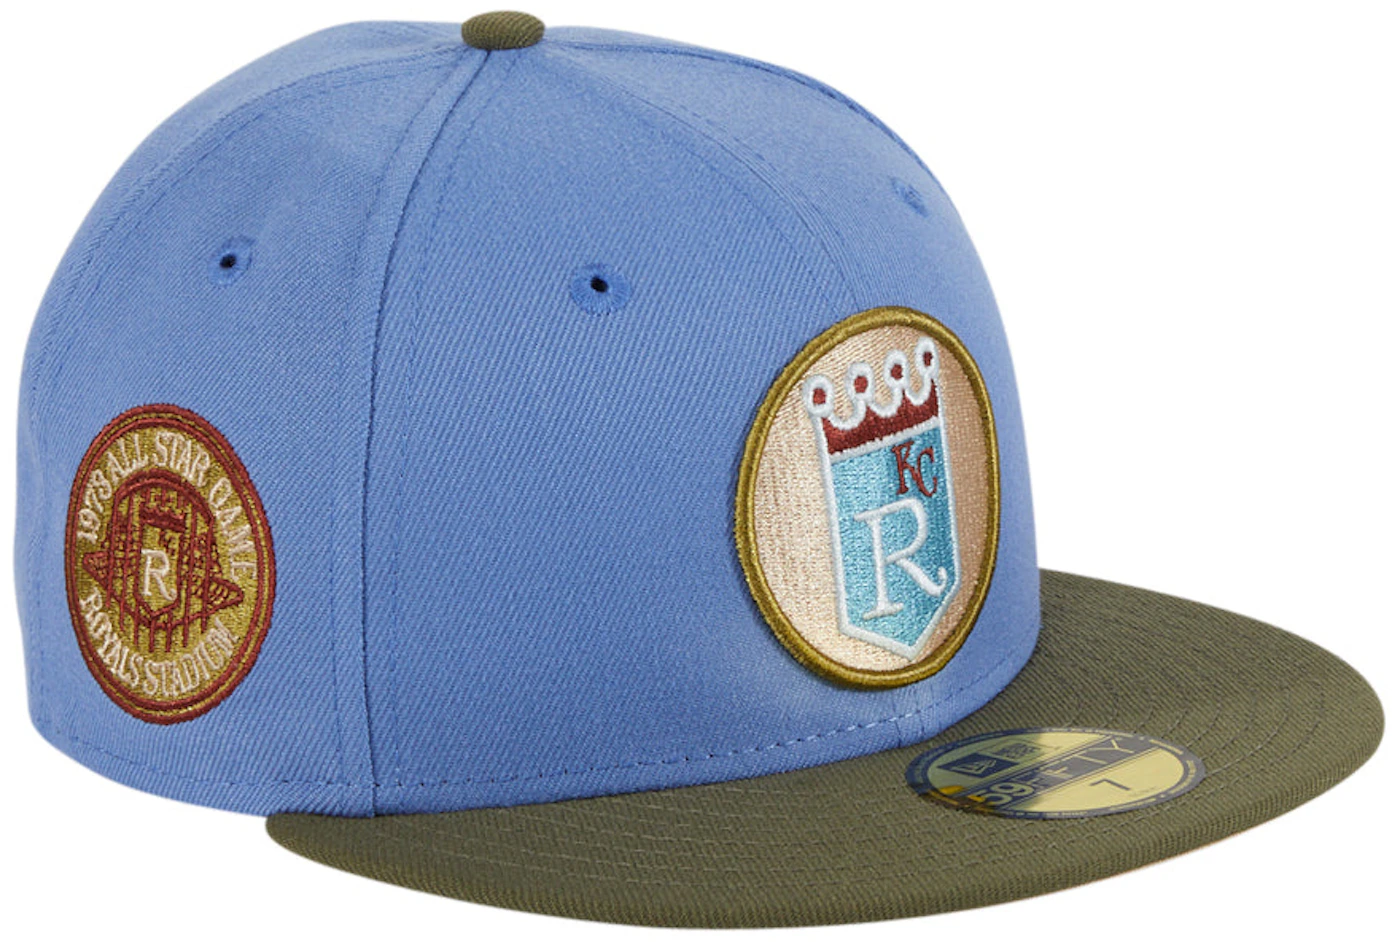 Kansas City Royals New Era 5950 Fitted Hat - Alt 2 - Light Blue/Royal